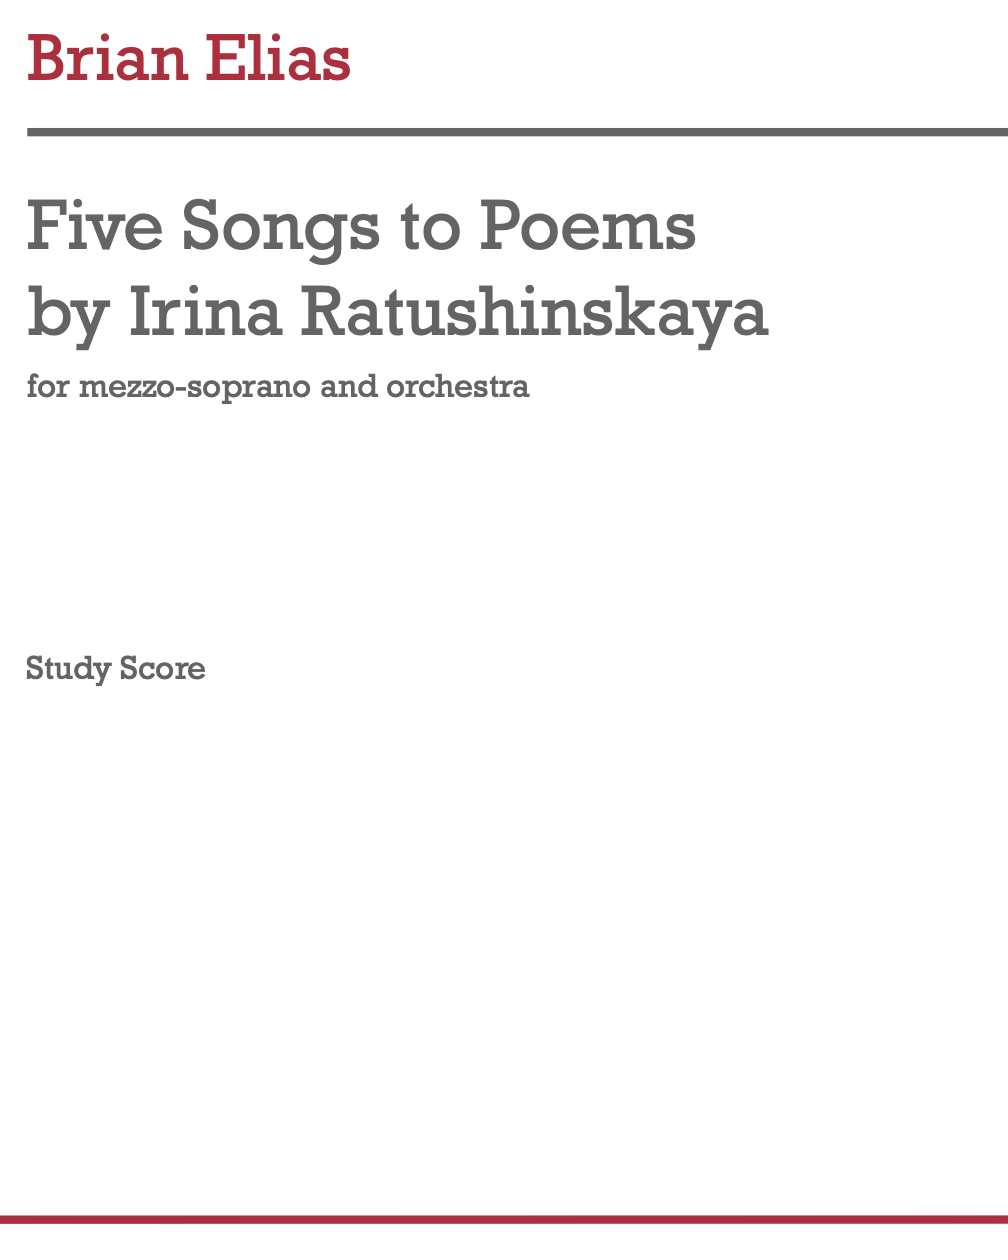 Five Songs to Poems by Irina Ratushinskaya